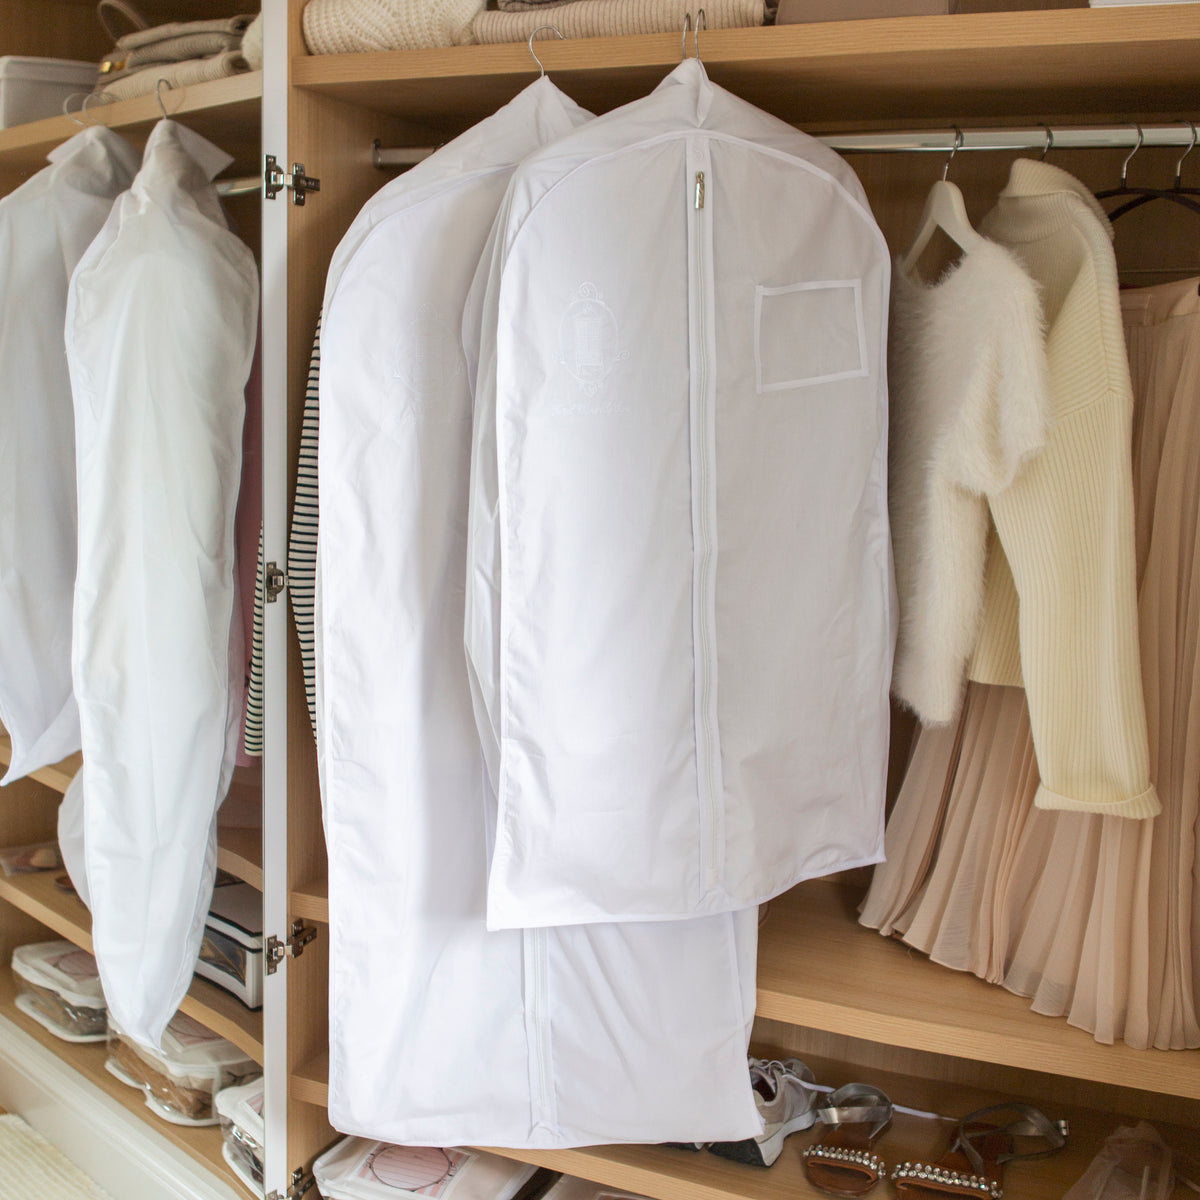 Hermes Garment Bag Cotton Travel Clothes Case White 110x60cm Unused | eBay